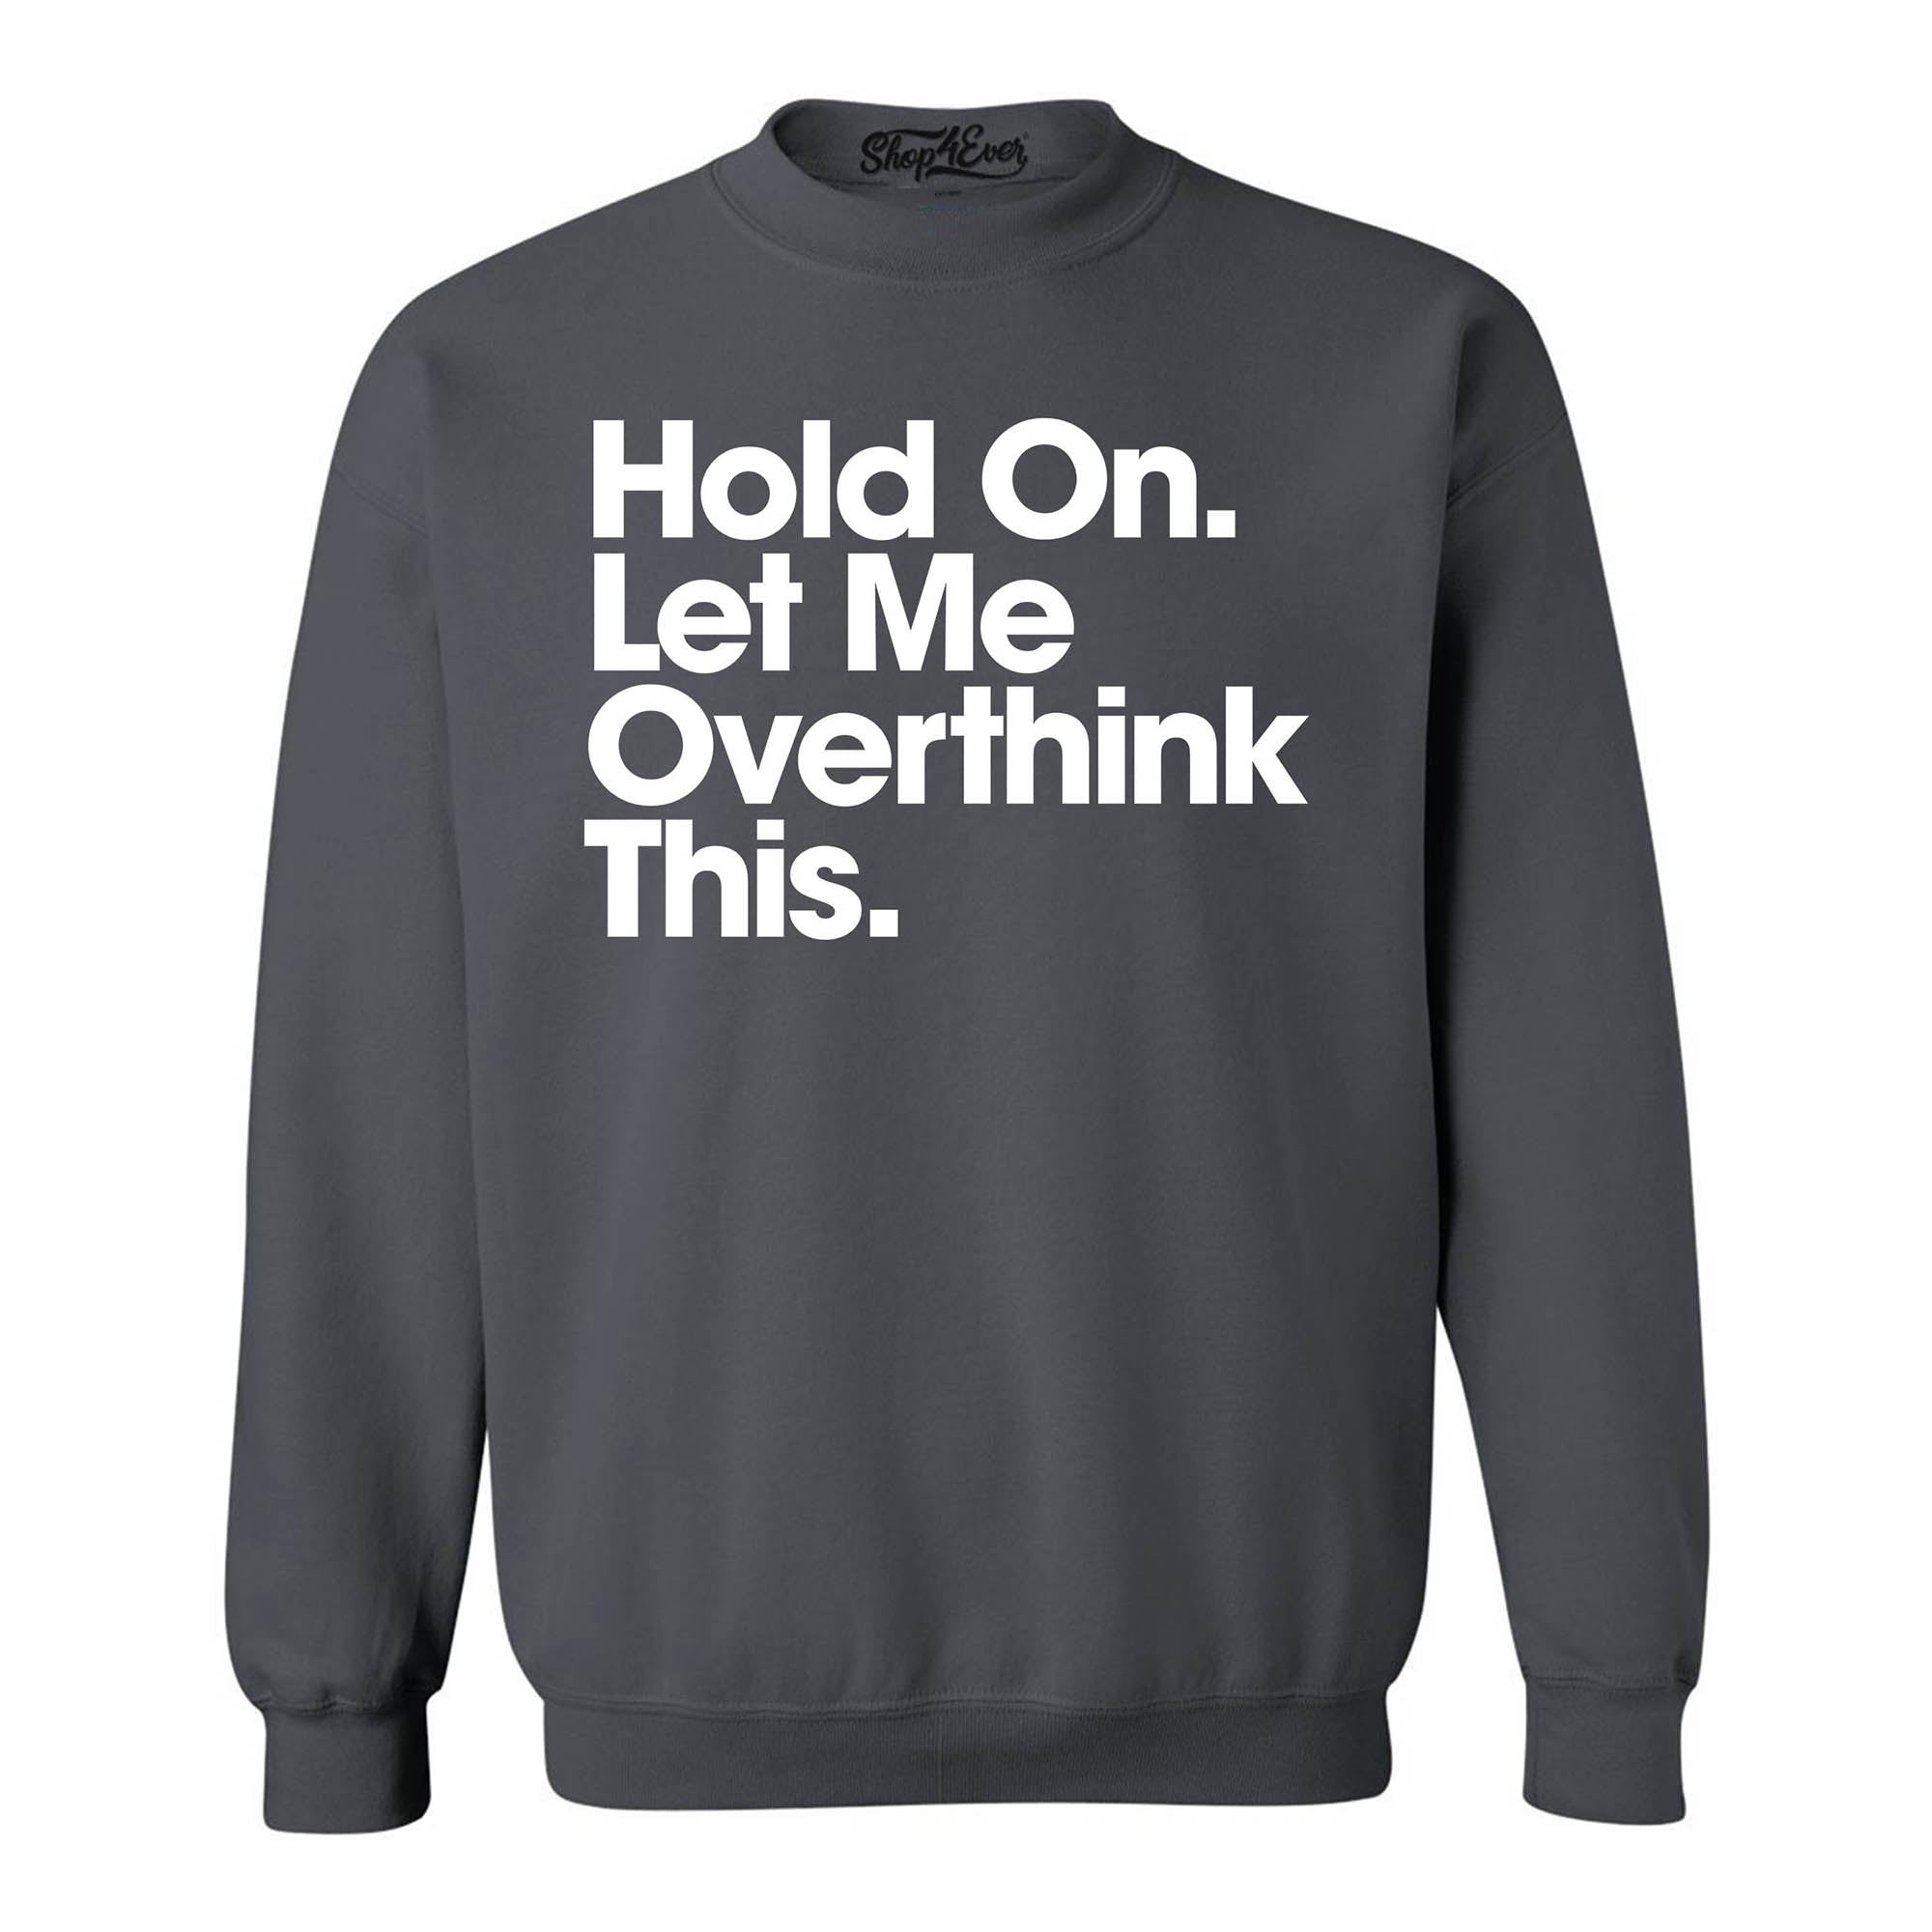 Hold On. Let Me Overthink This. Crewneck Sweatshirts